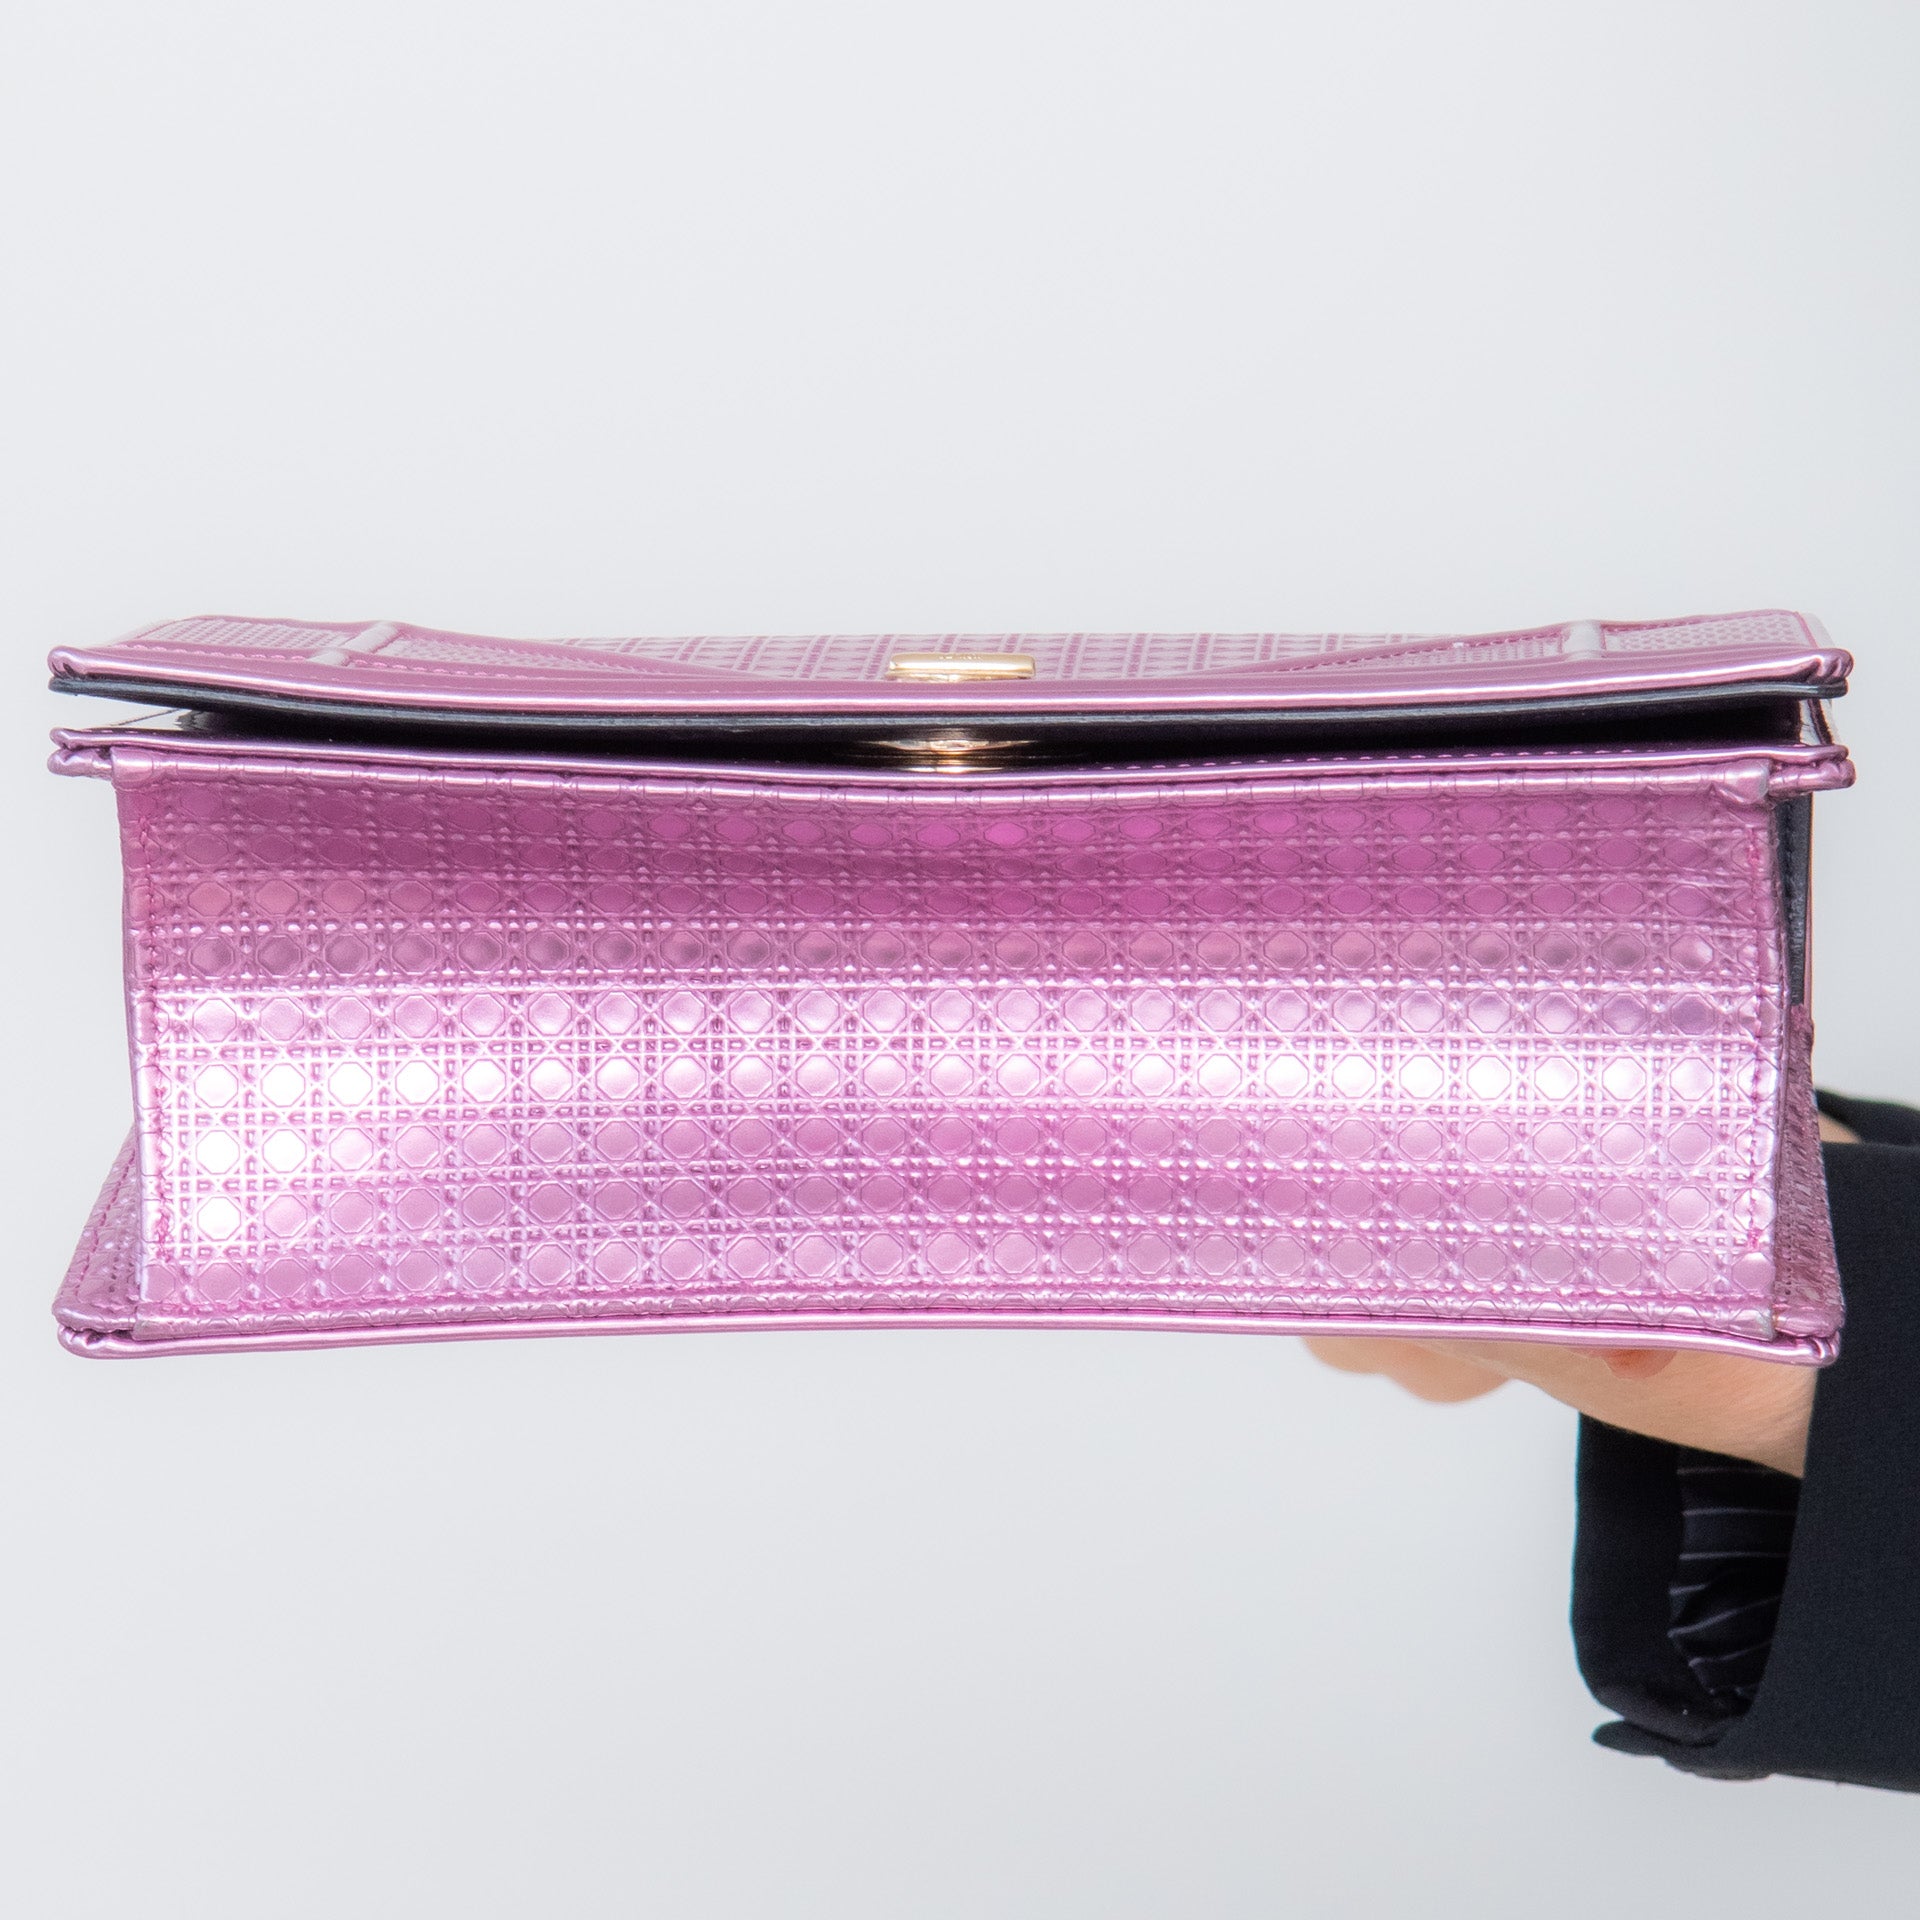 Dior Diorama Metallic Pink Bag - Image 7 of 8